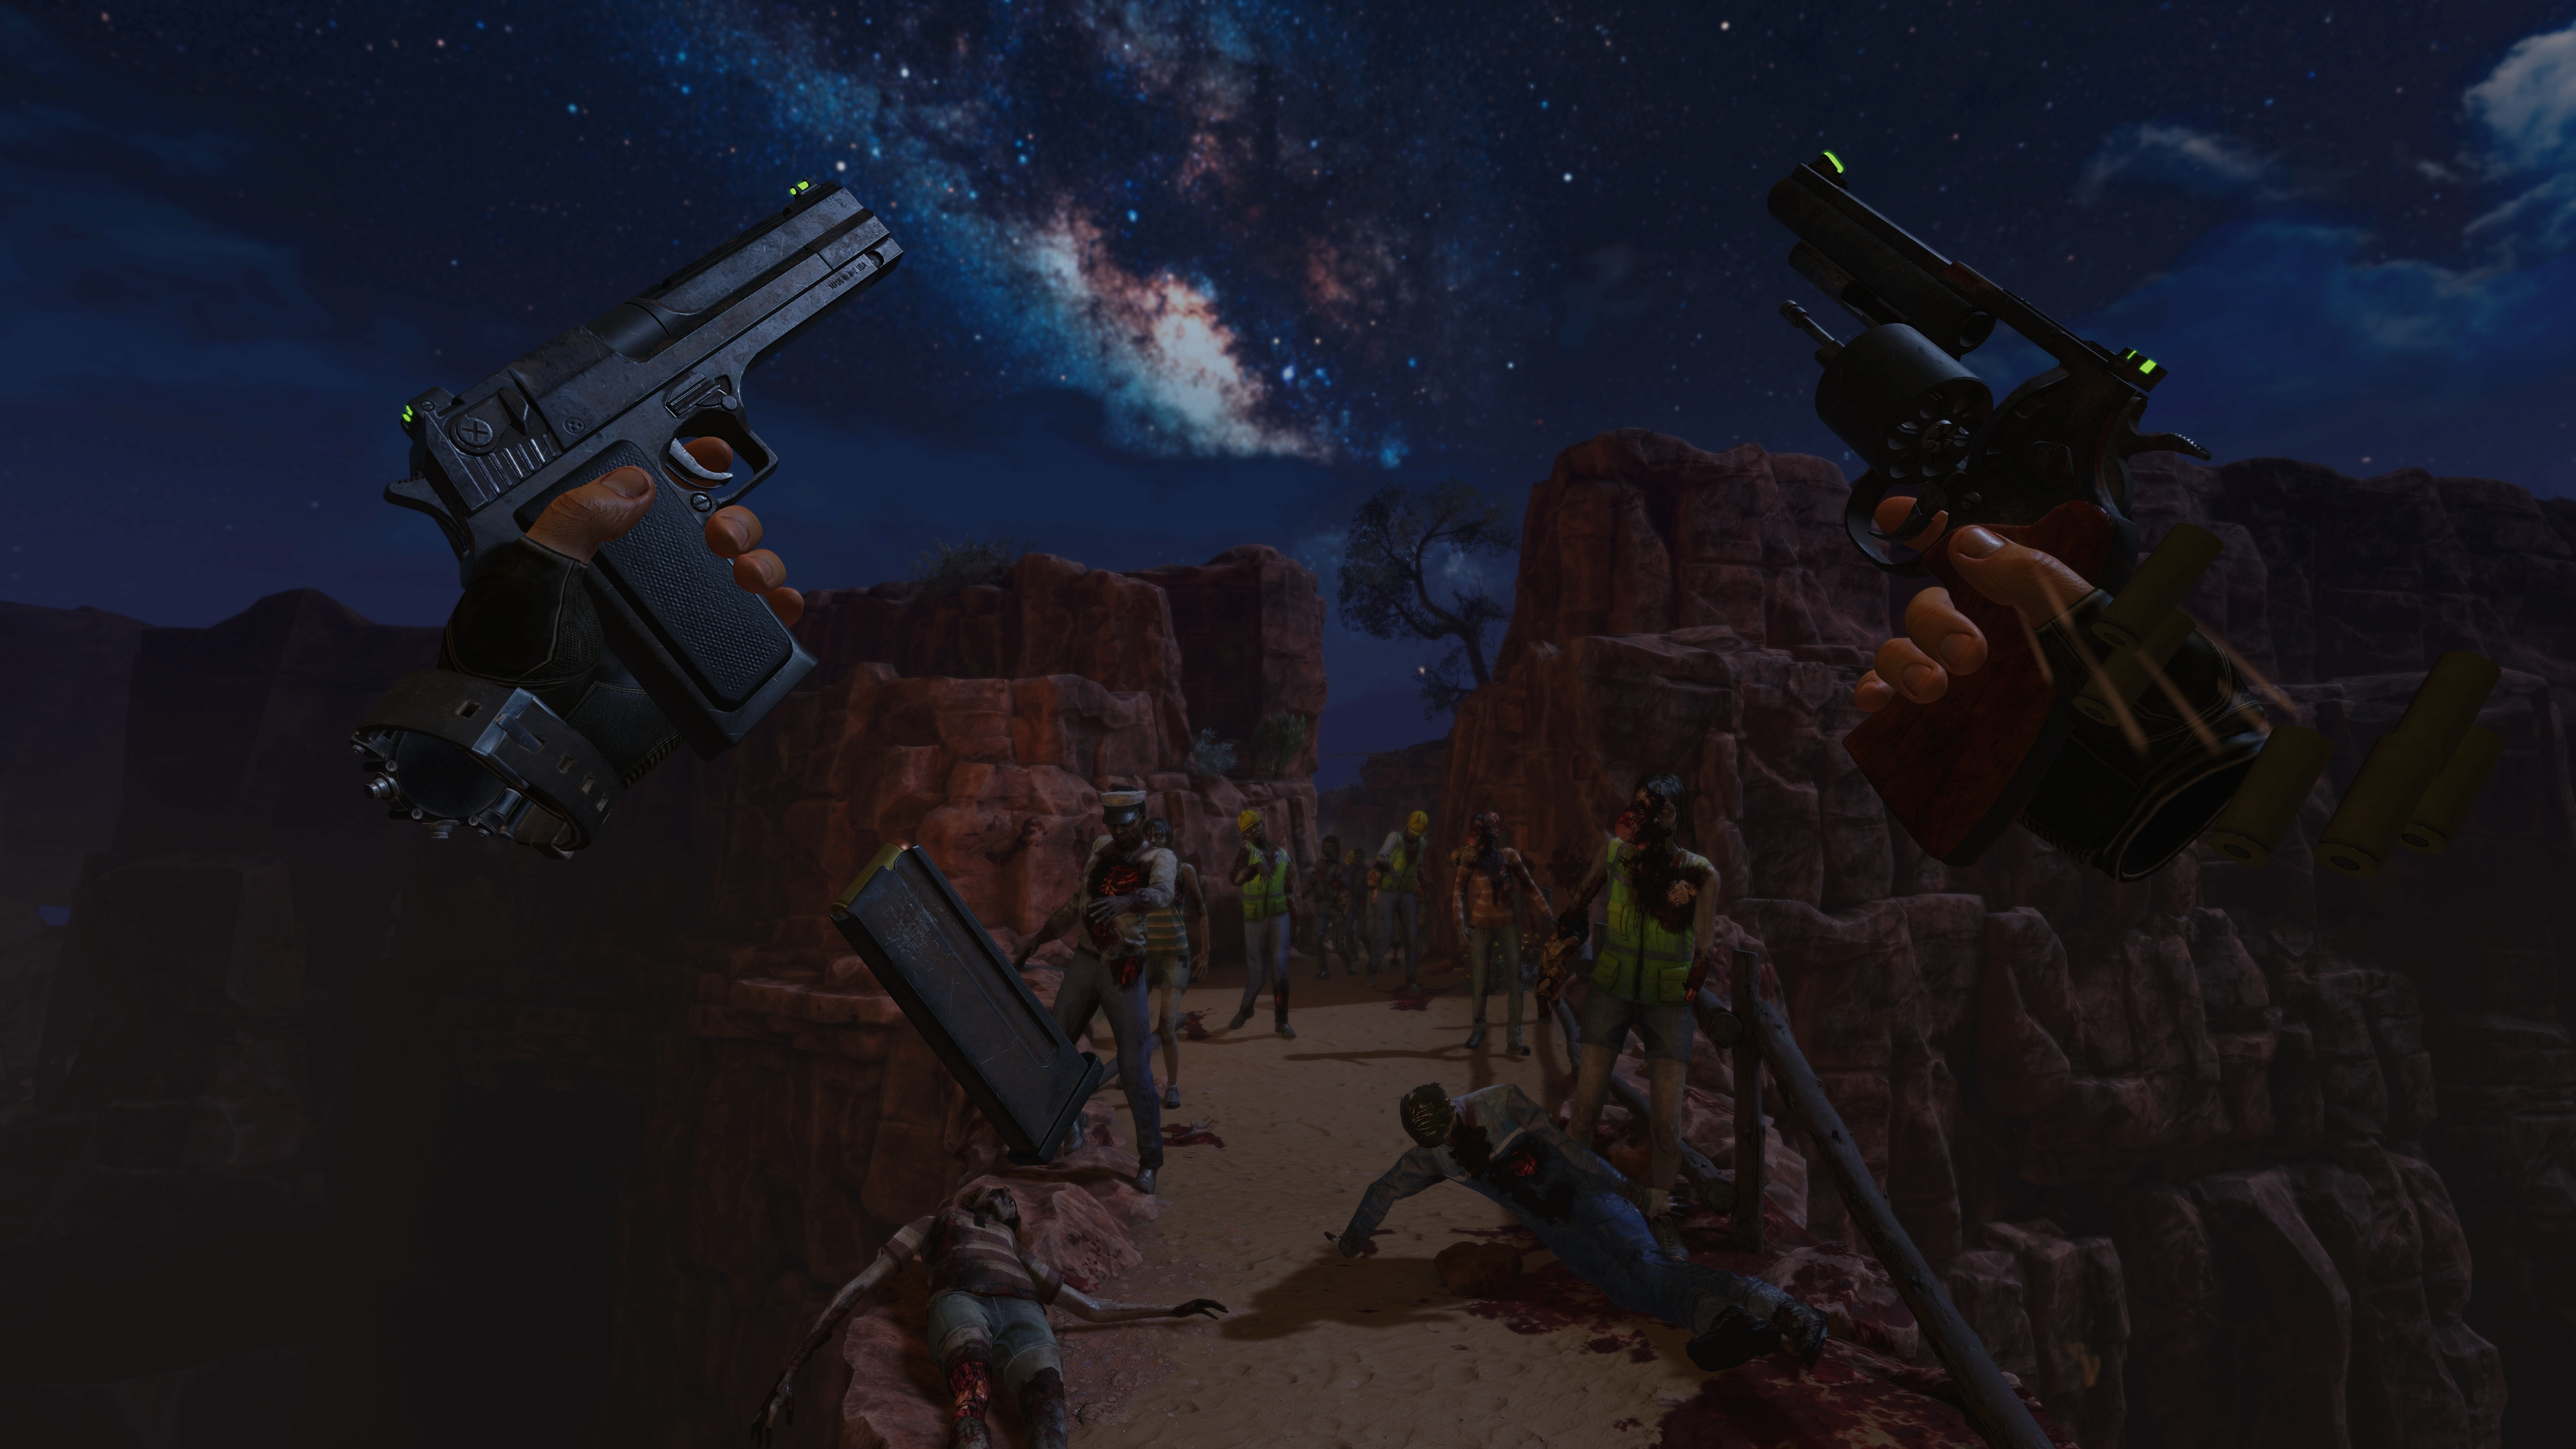 The player reloads two pistols in Arizona Sunshine 2.